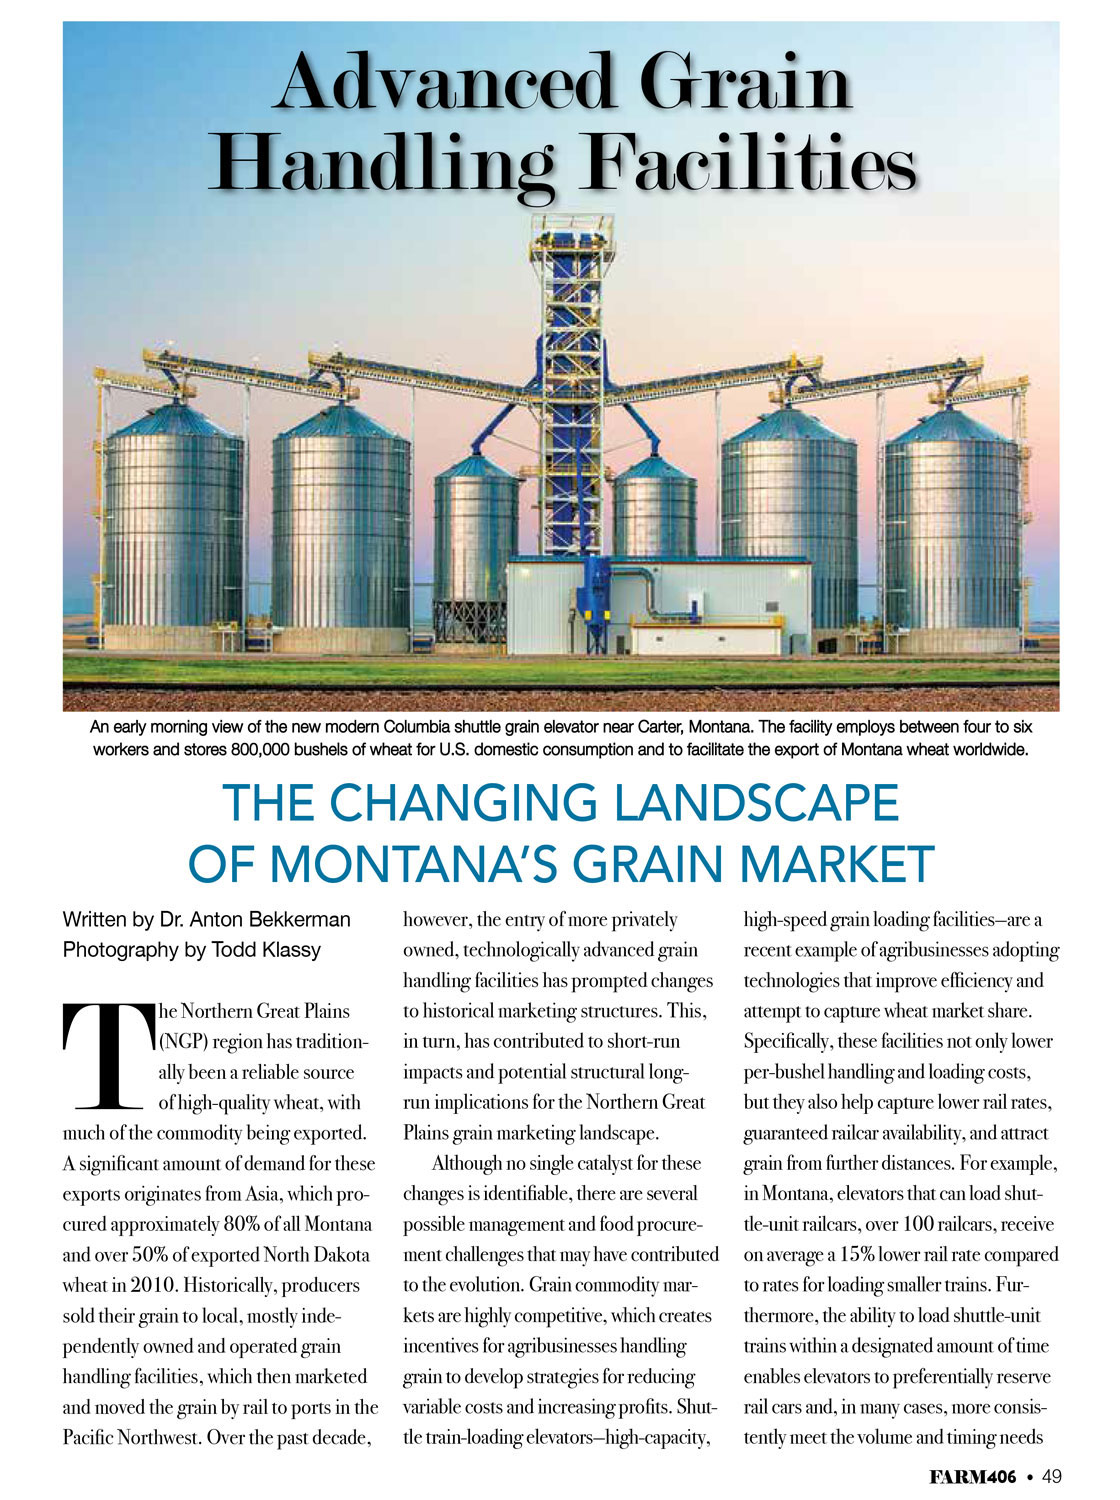 Photos of grain elevators featured in agriculture magazine